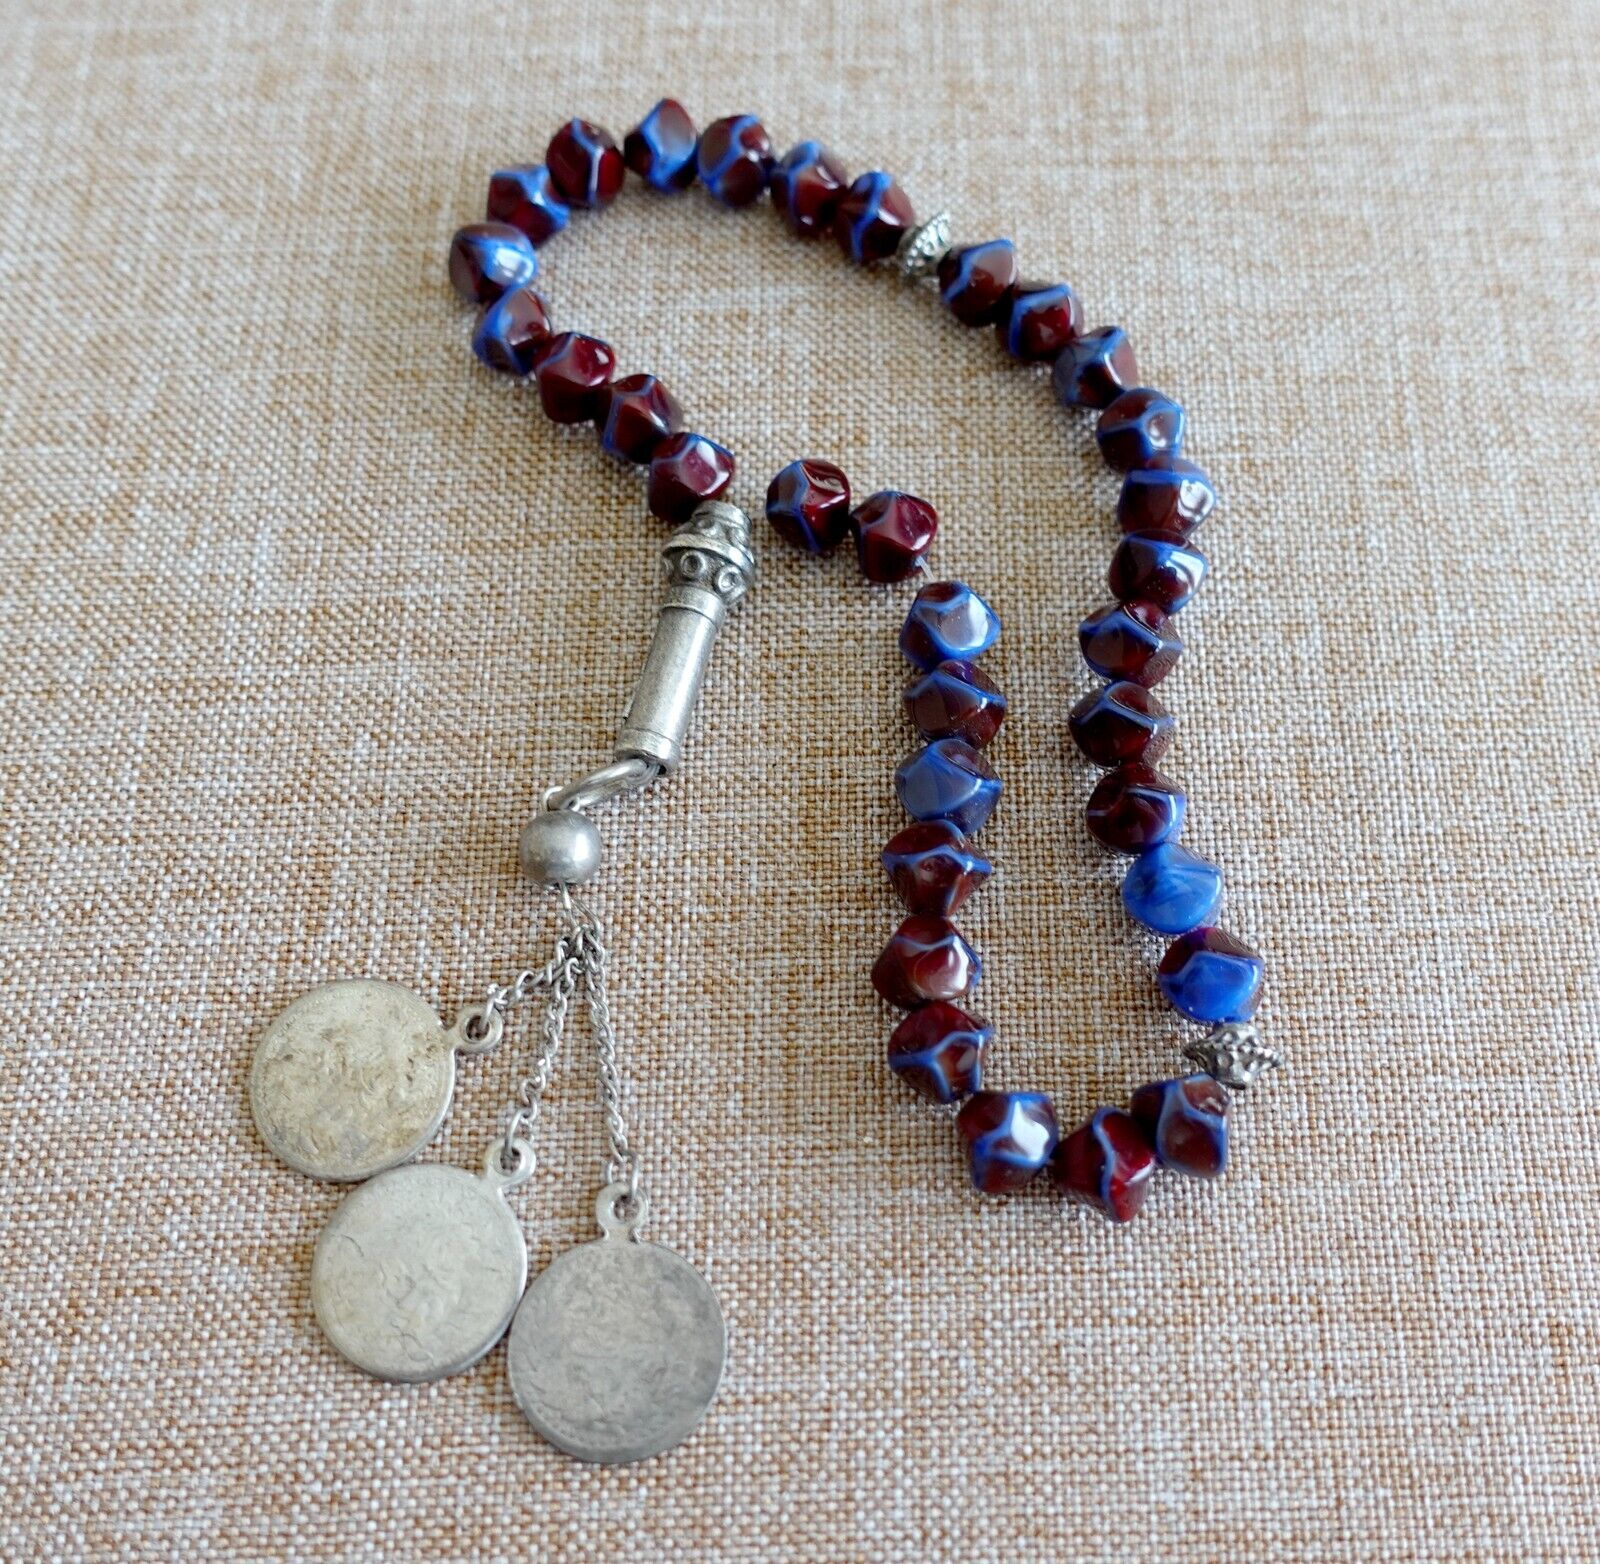 Vintage Muslim Islamic Prayer Beads 3 Coins 33 Red Blue Glass Beads